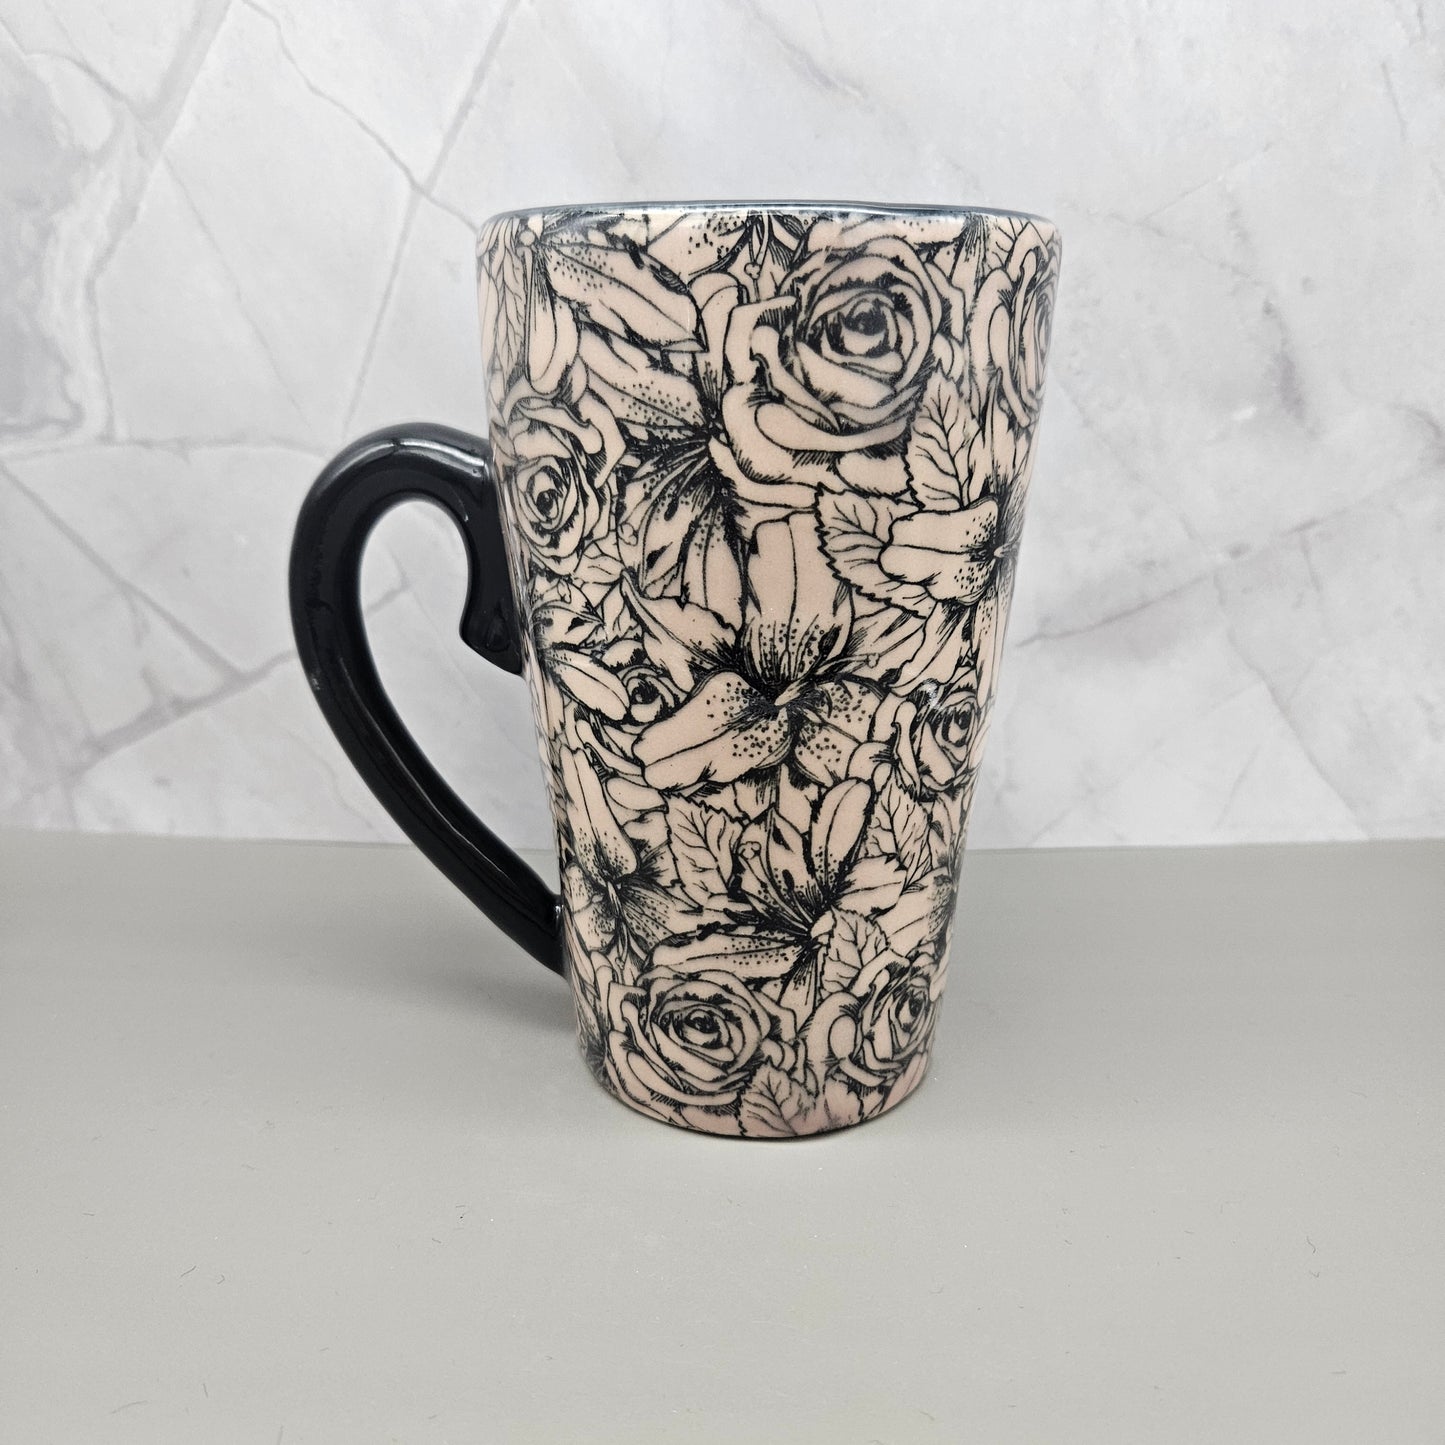 Pink Rose and Lily mug, 16 oz, black interior